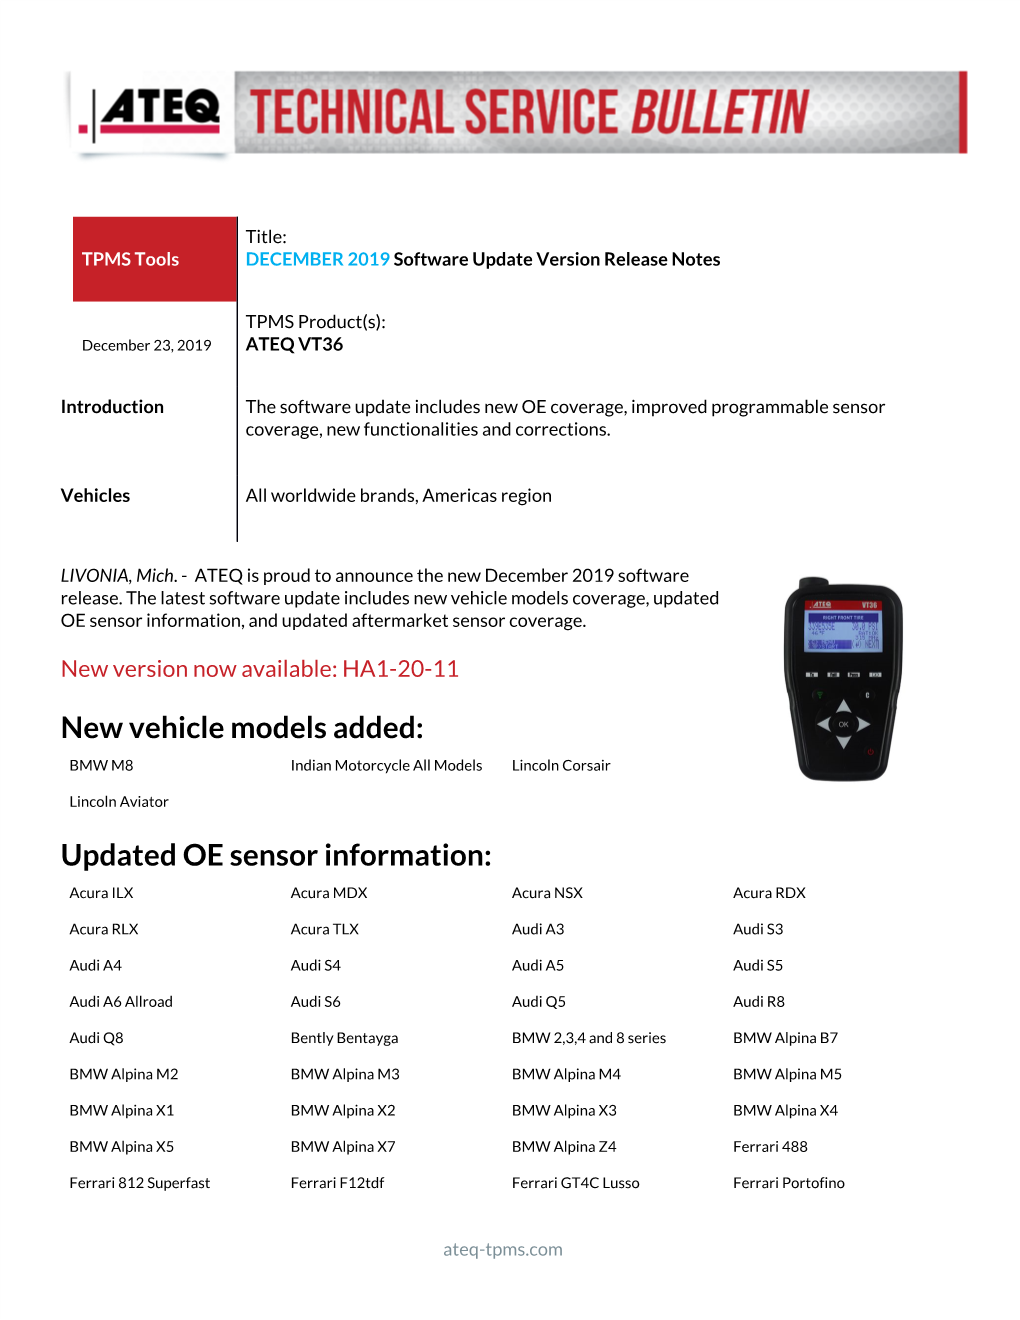 Updated OE Sensor Information, and Updated Aftermarket Sensor Coverage